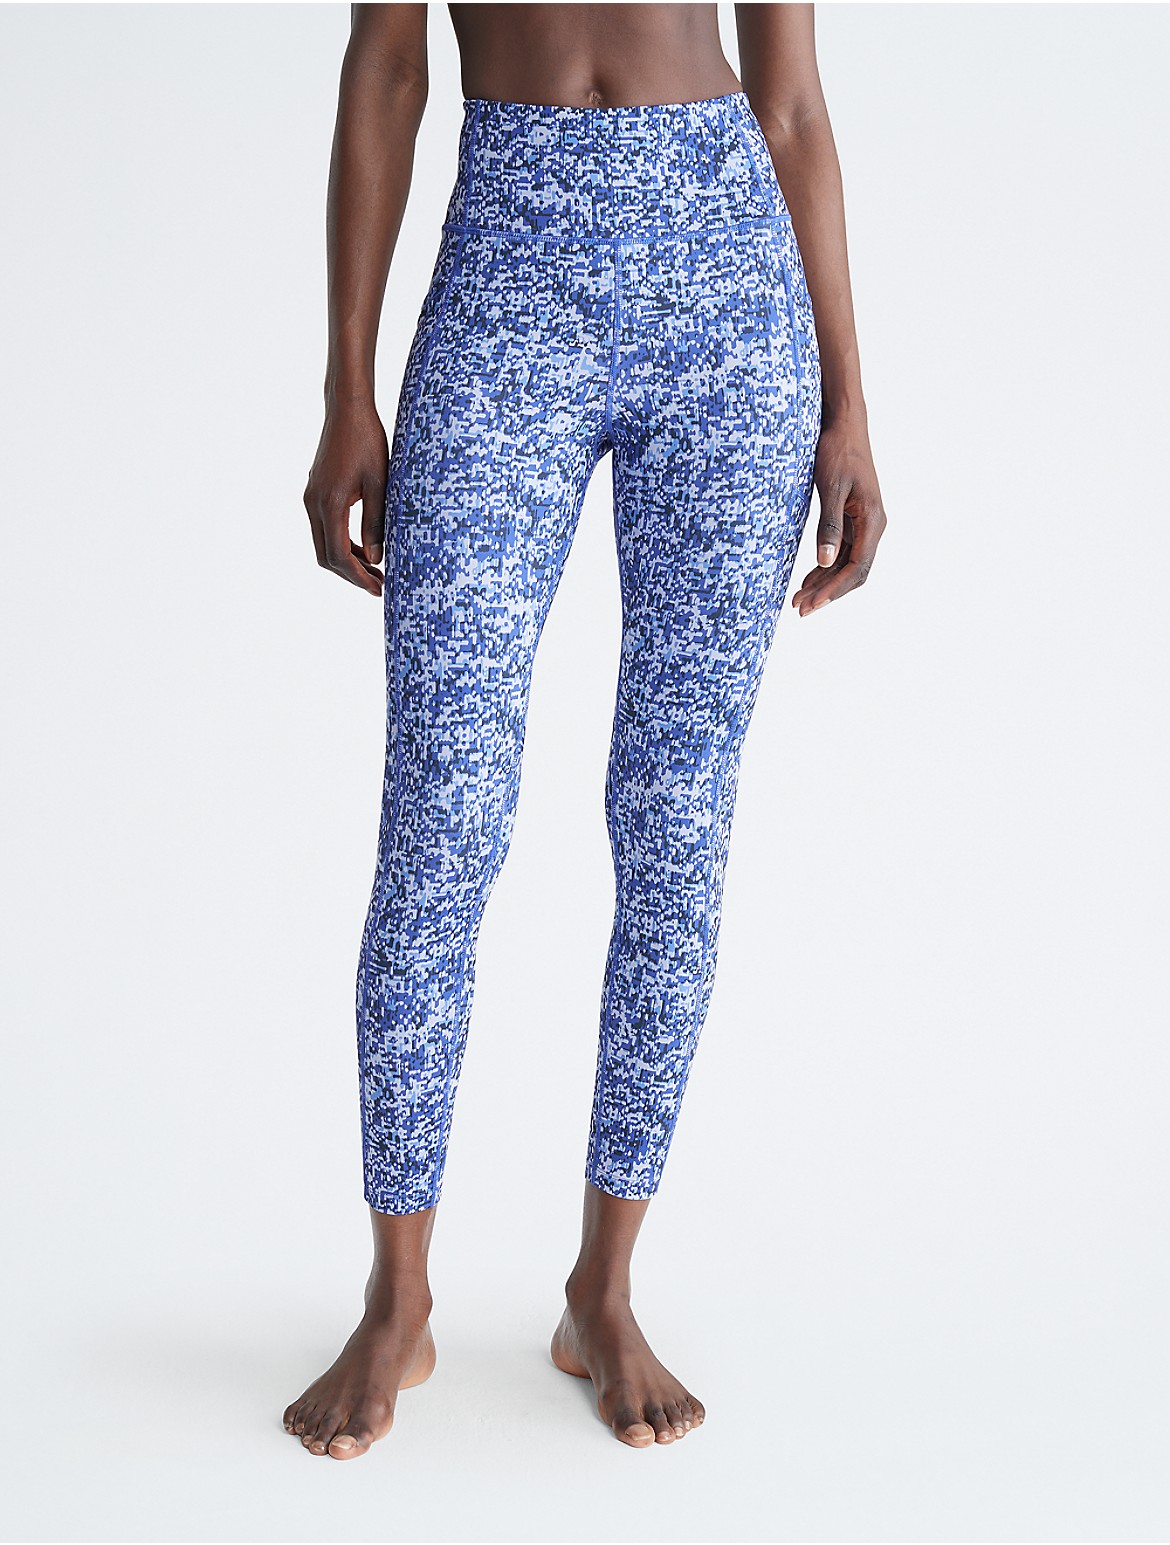 Calvin Klein Women's Performance Sleek Print 7/8 Leggings - Blue - XL